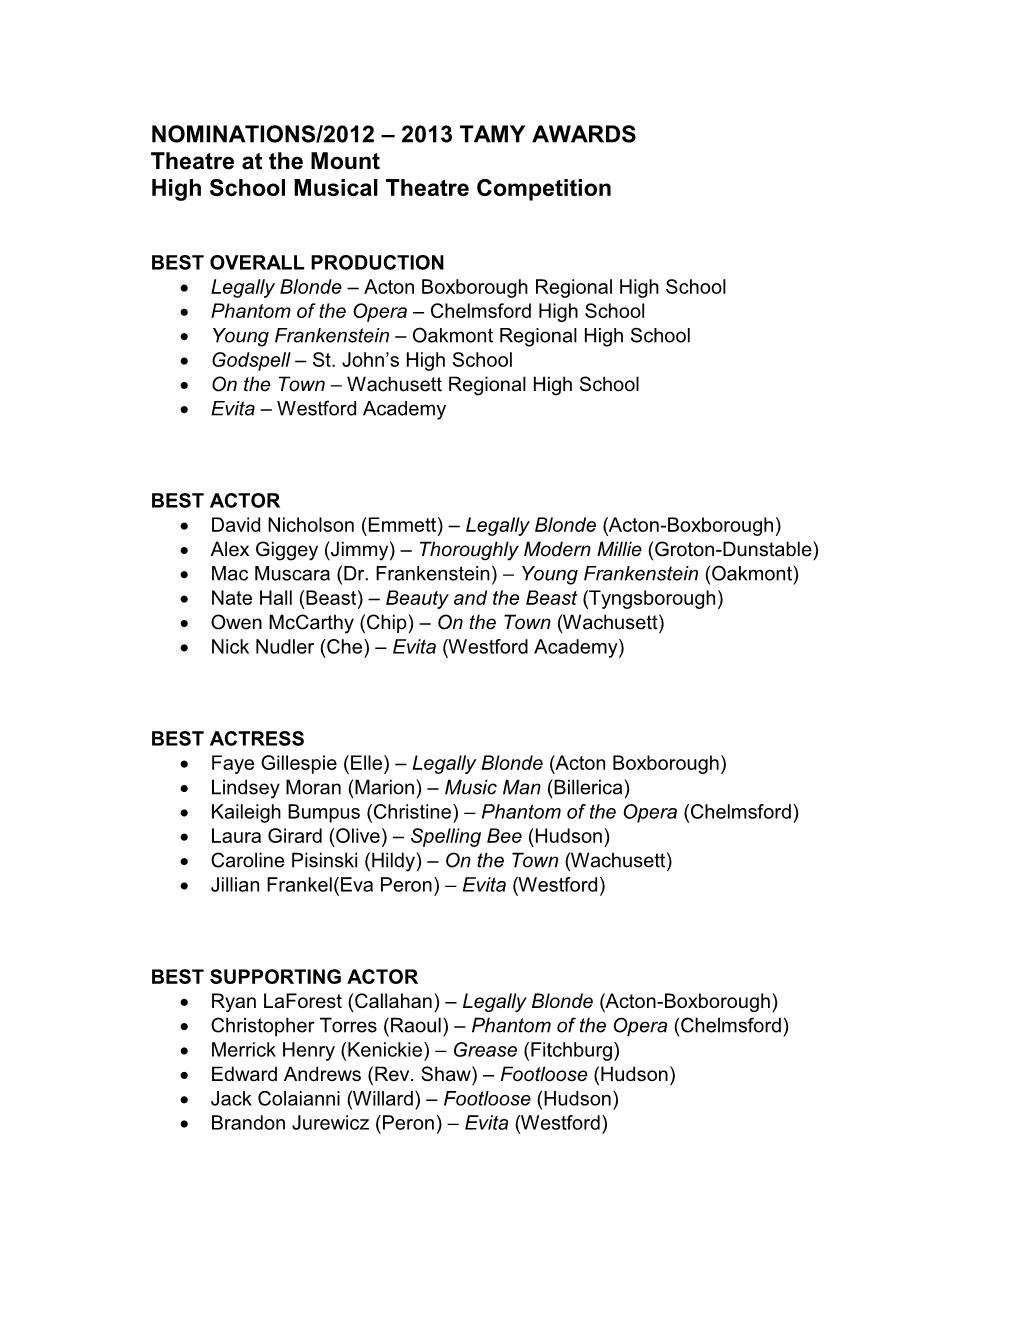 Nominations/2006 – 2007 Tamy Awards